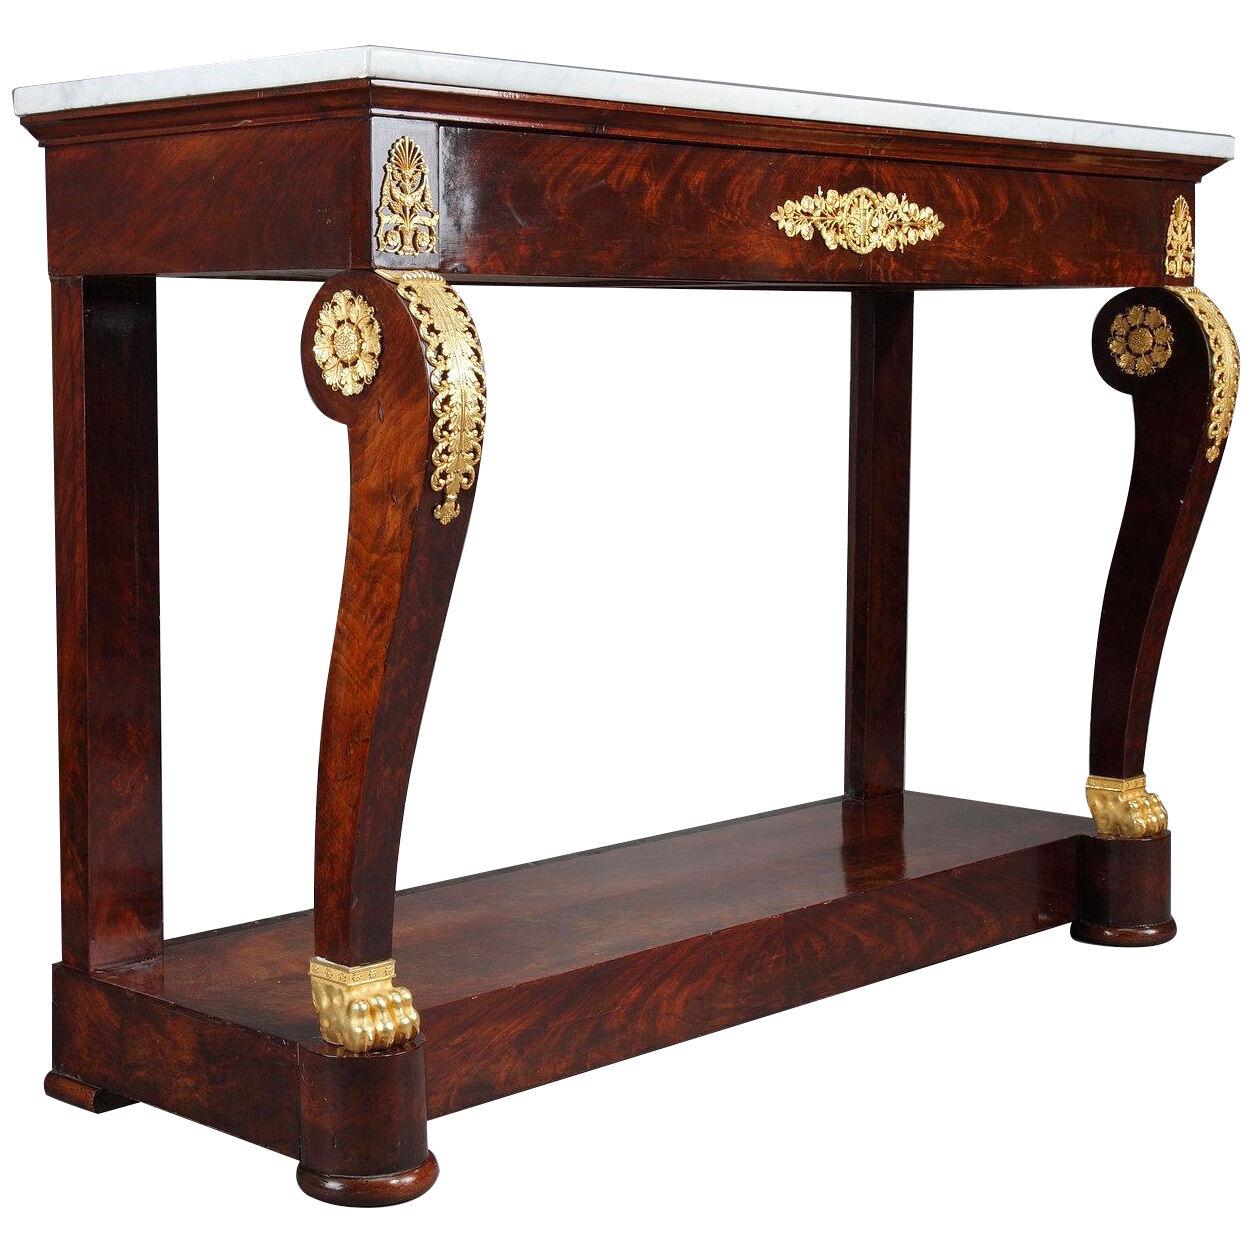 Restoration period mahogany veneer console